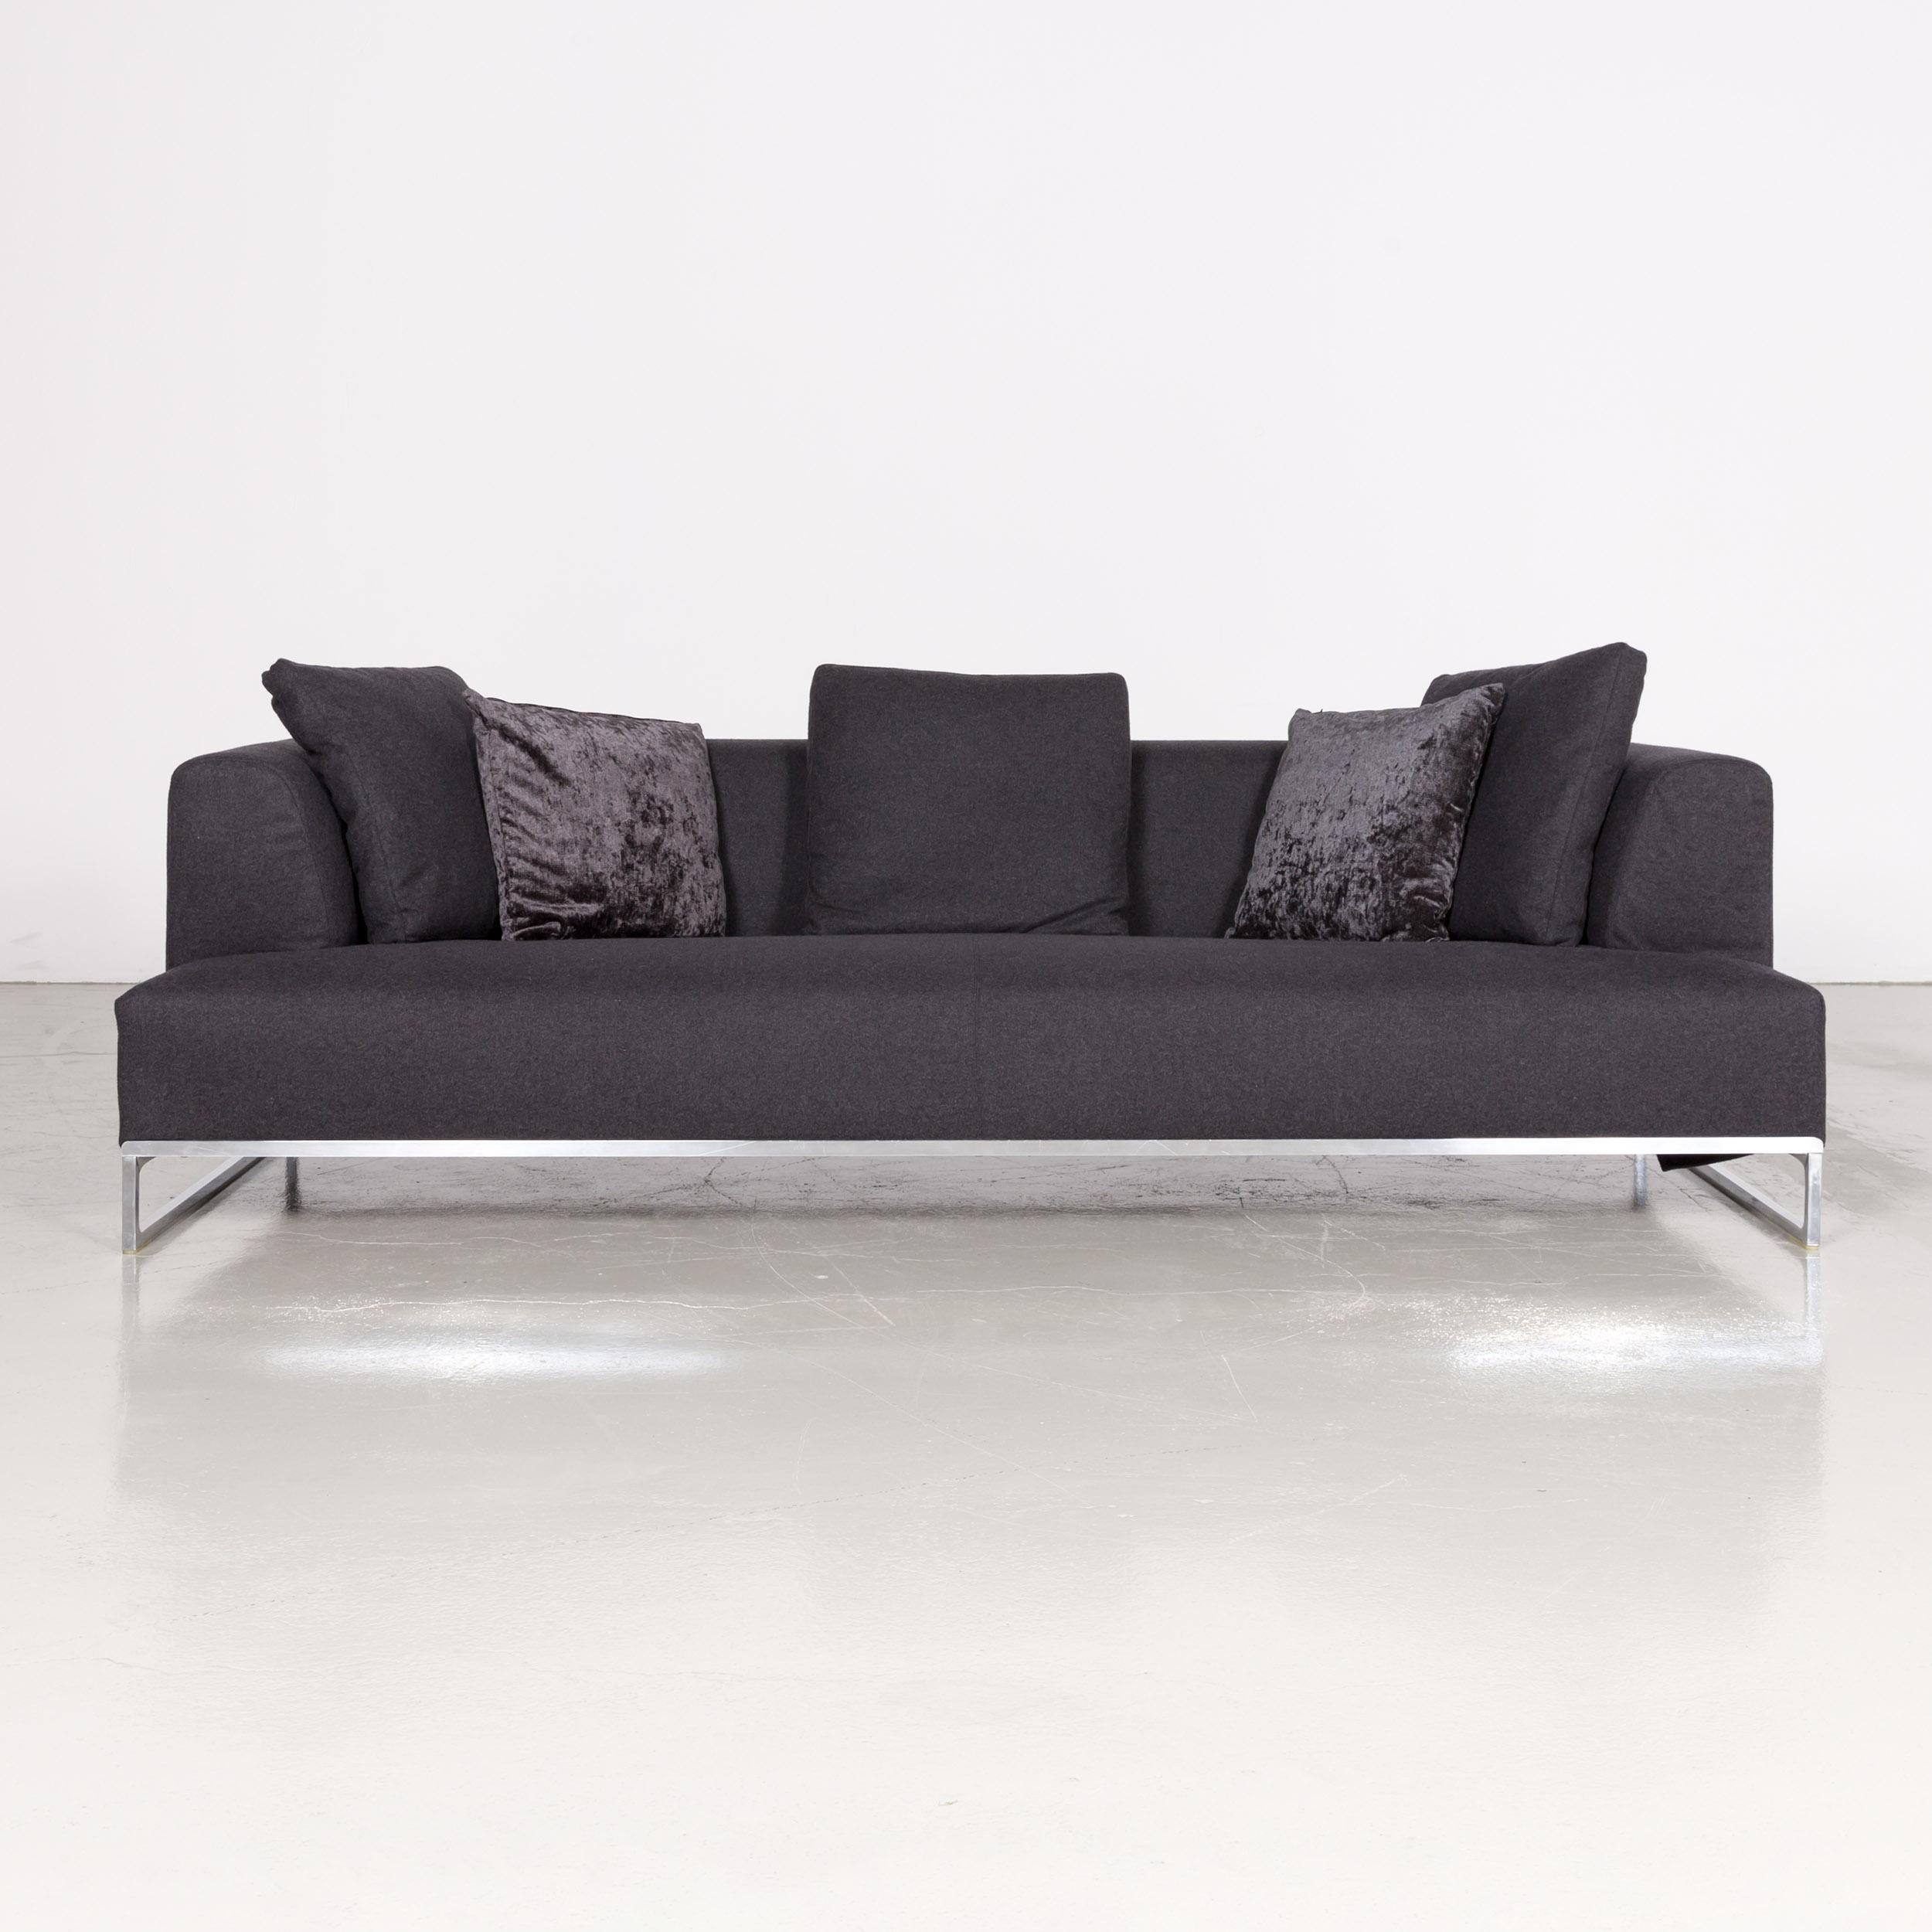 B&B Italia solo fabric designer sofa set three-seat couch stool anthracite grey.